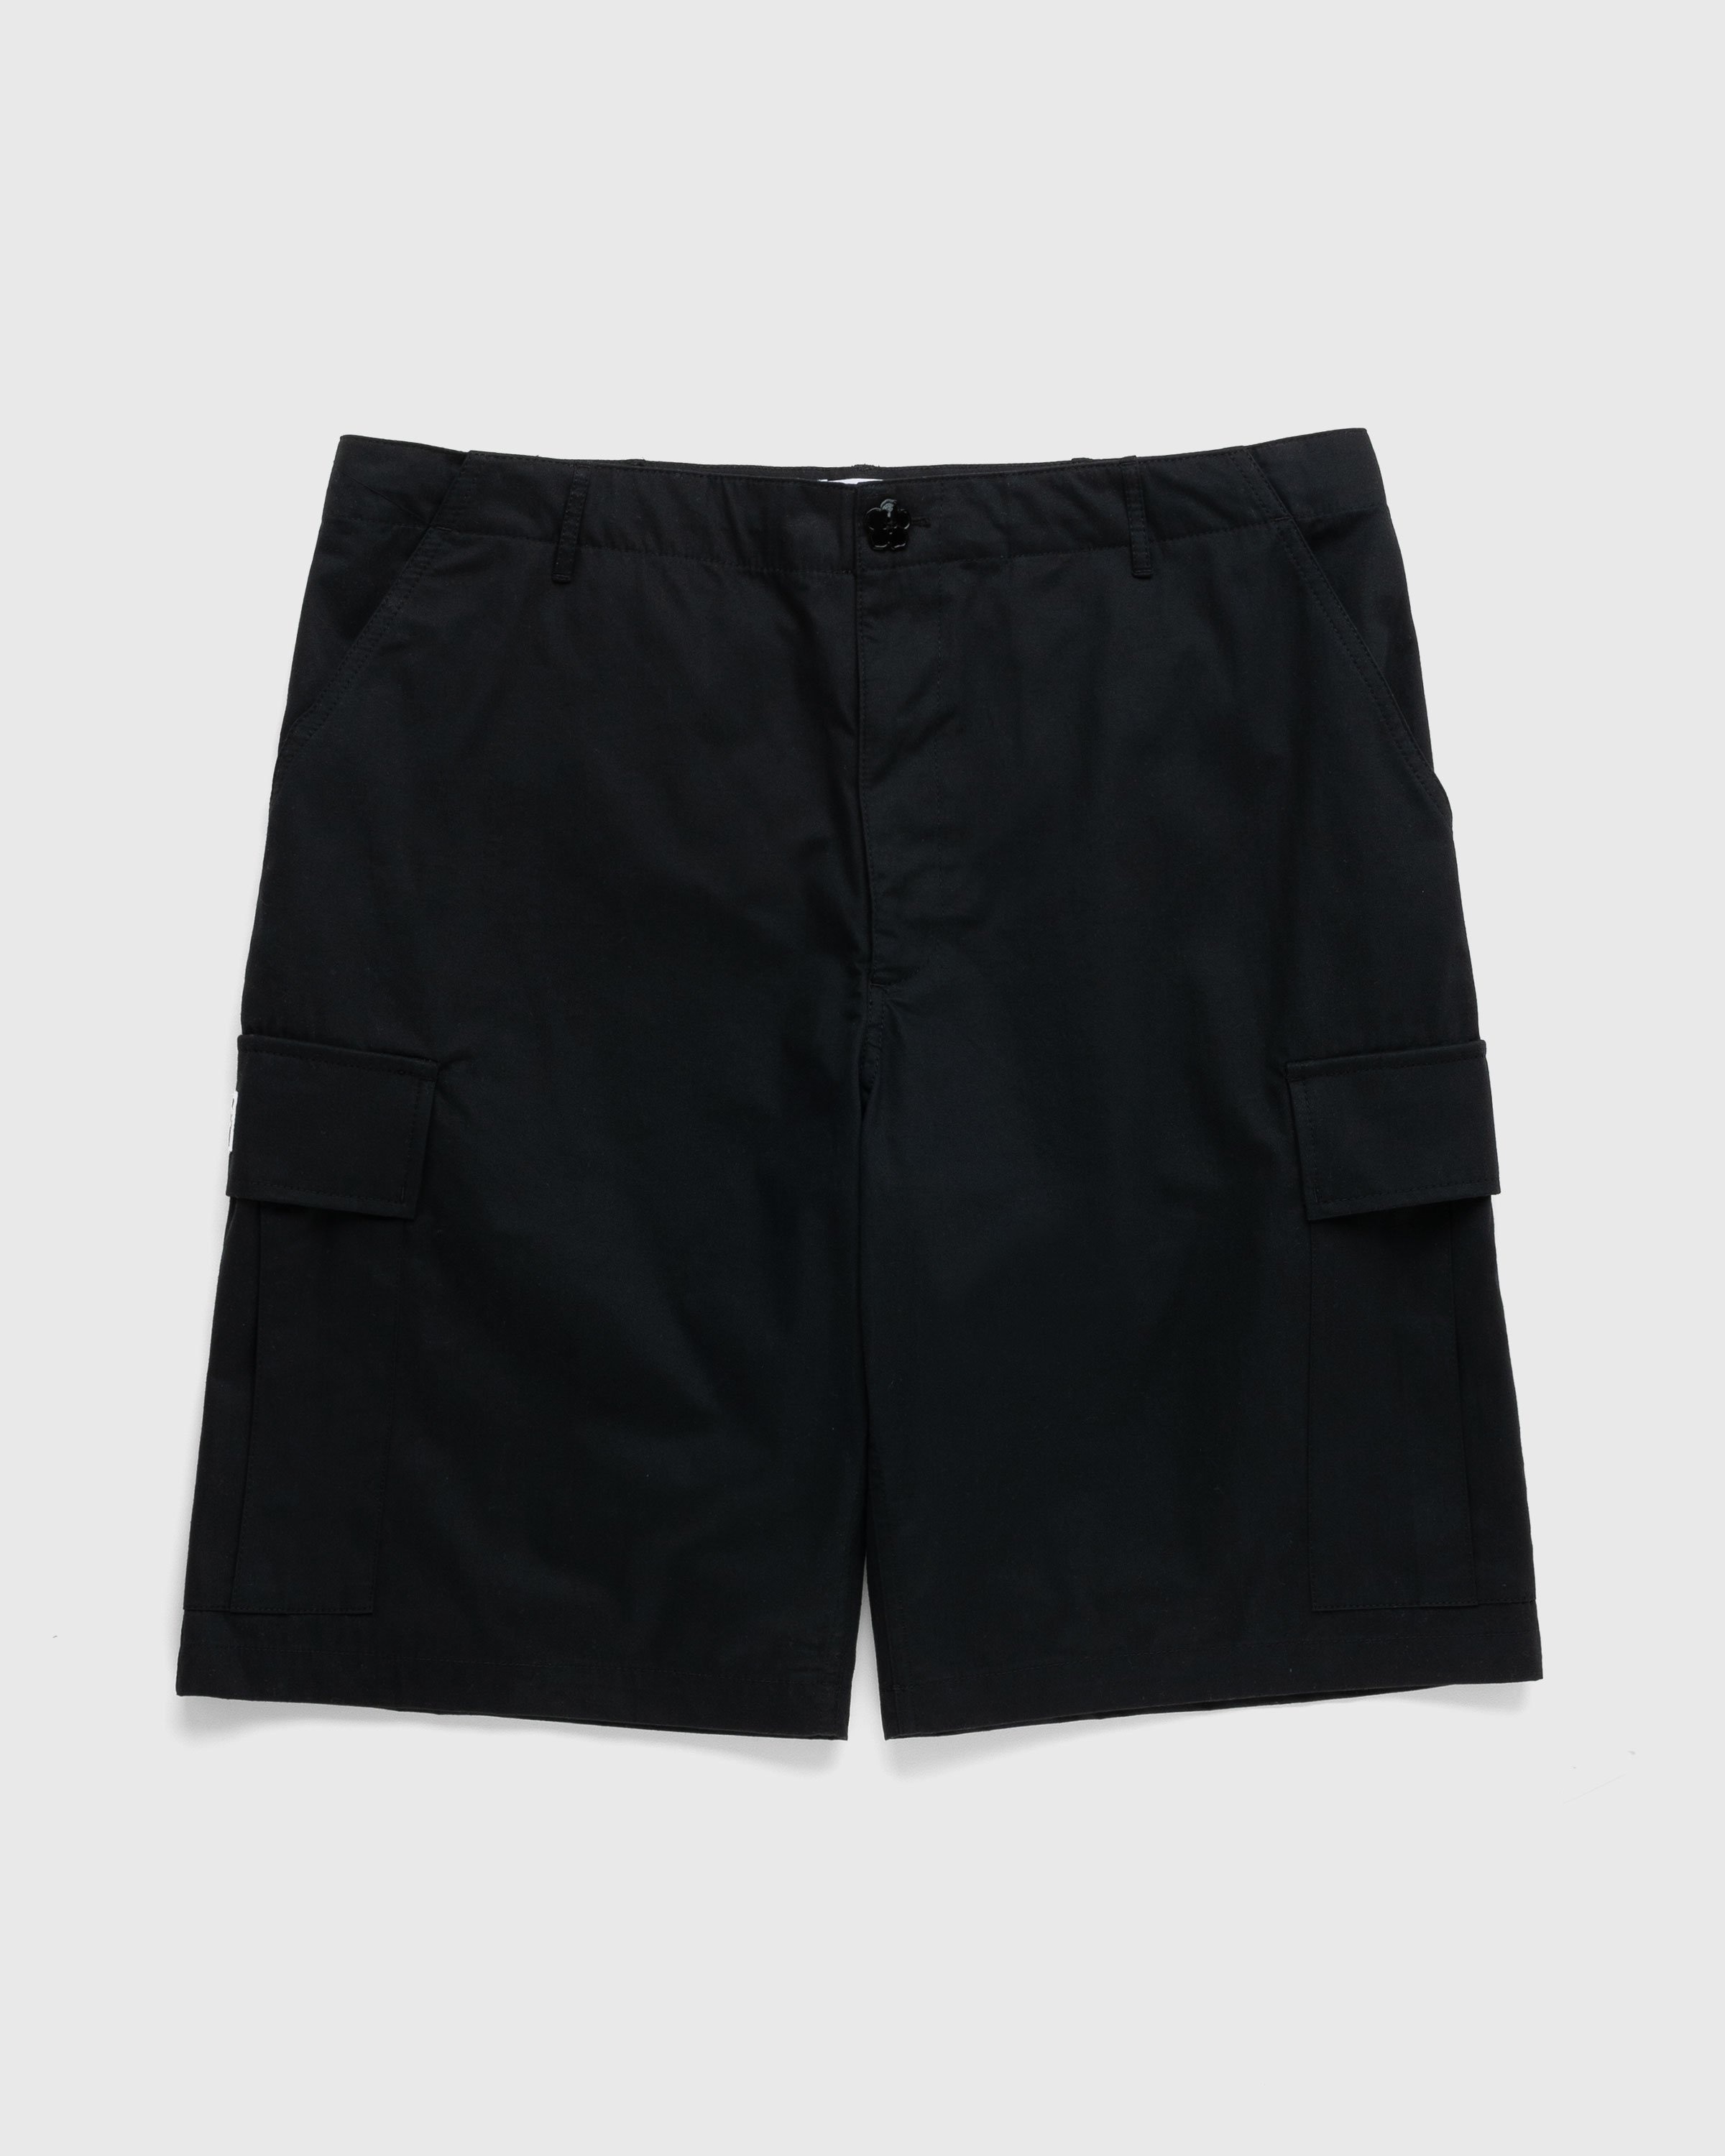 Kenzo – Cargo Shorts - Short Cuts - Black - Image 1